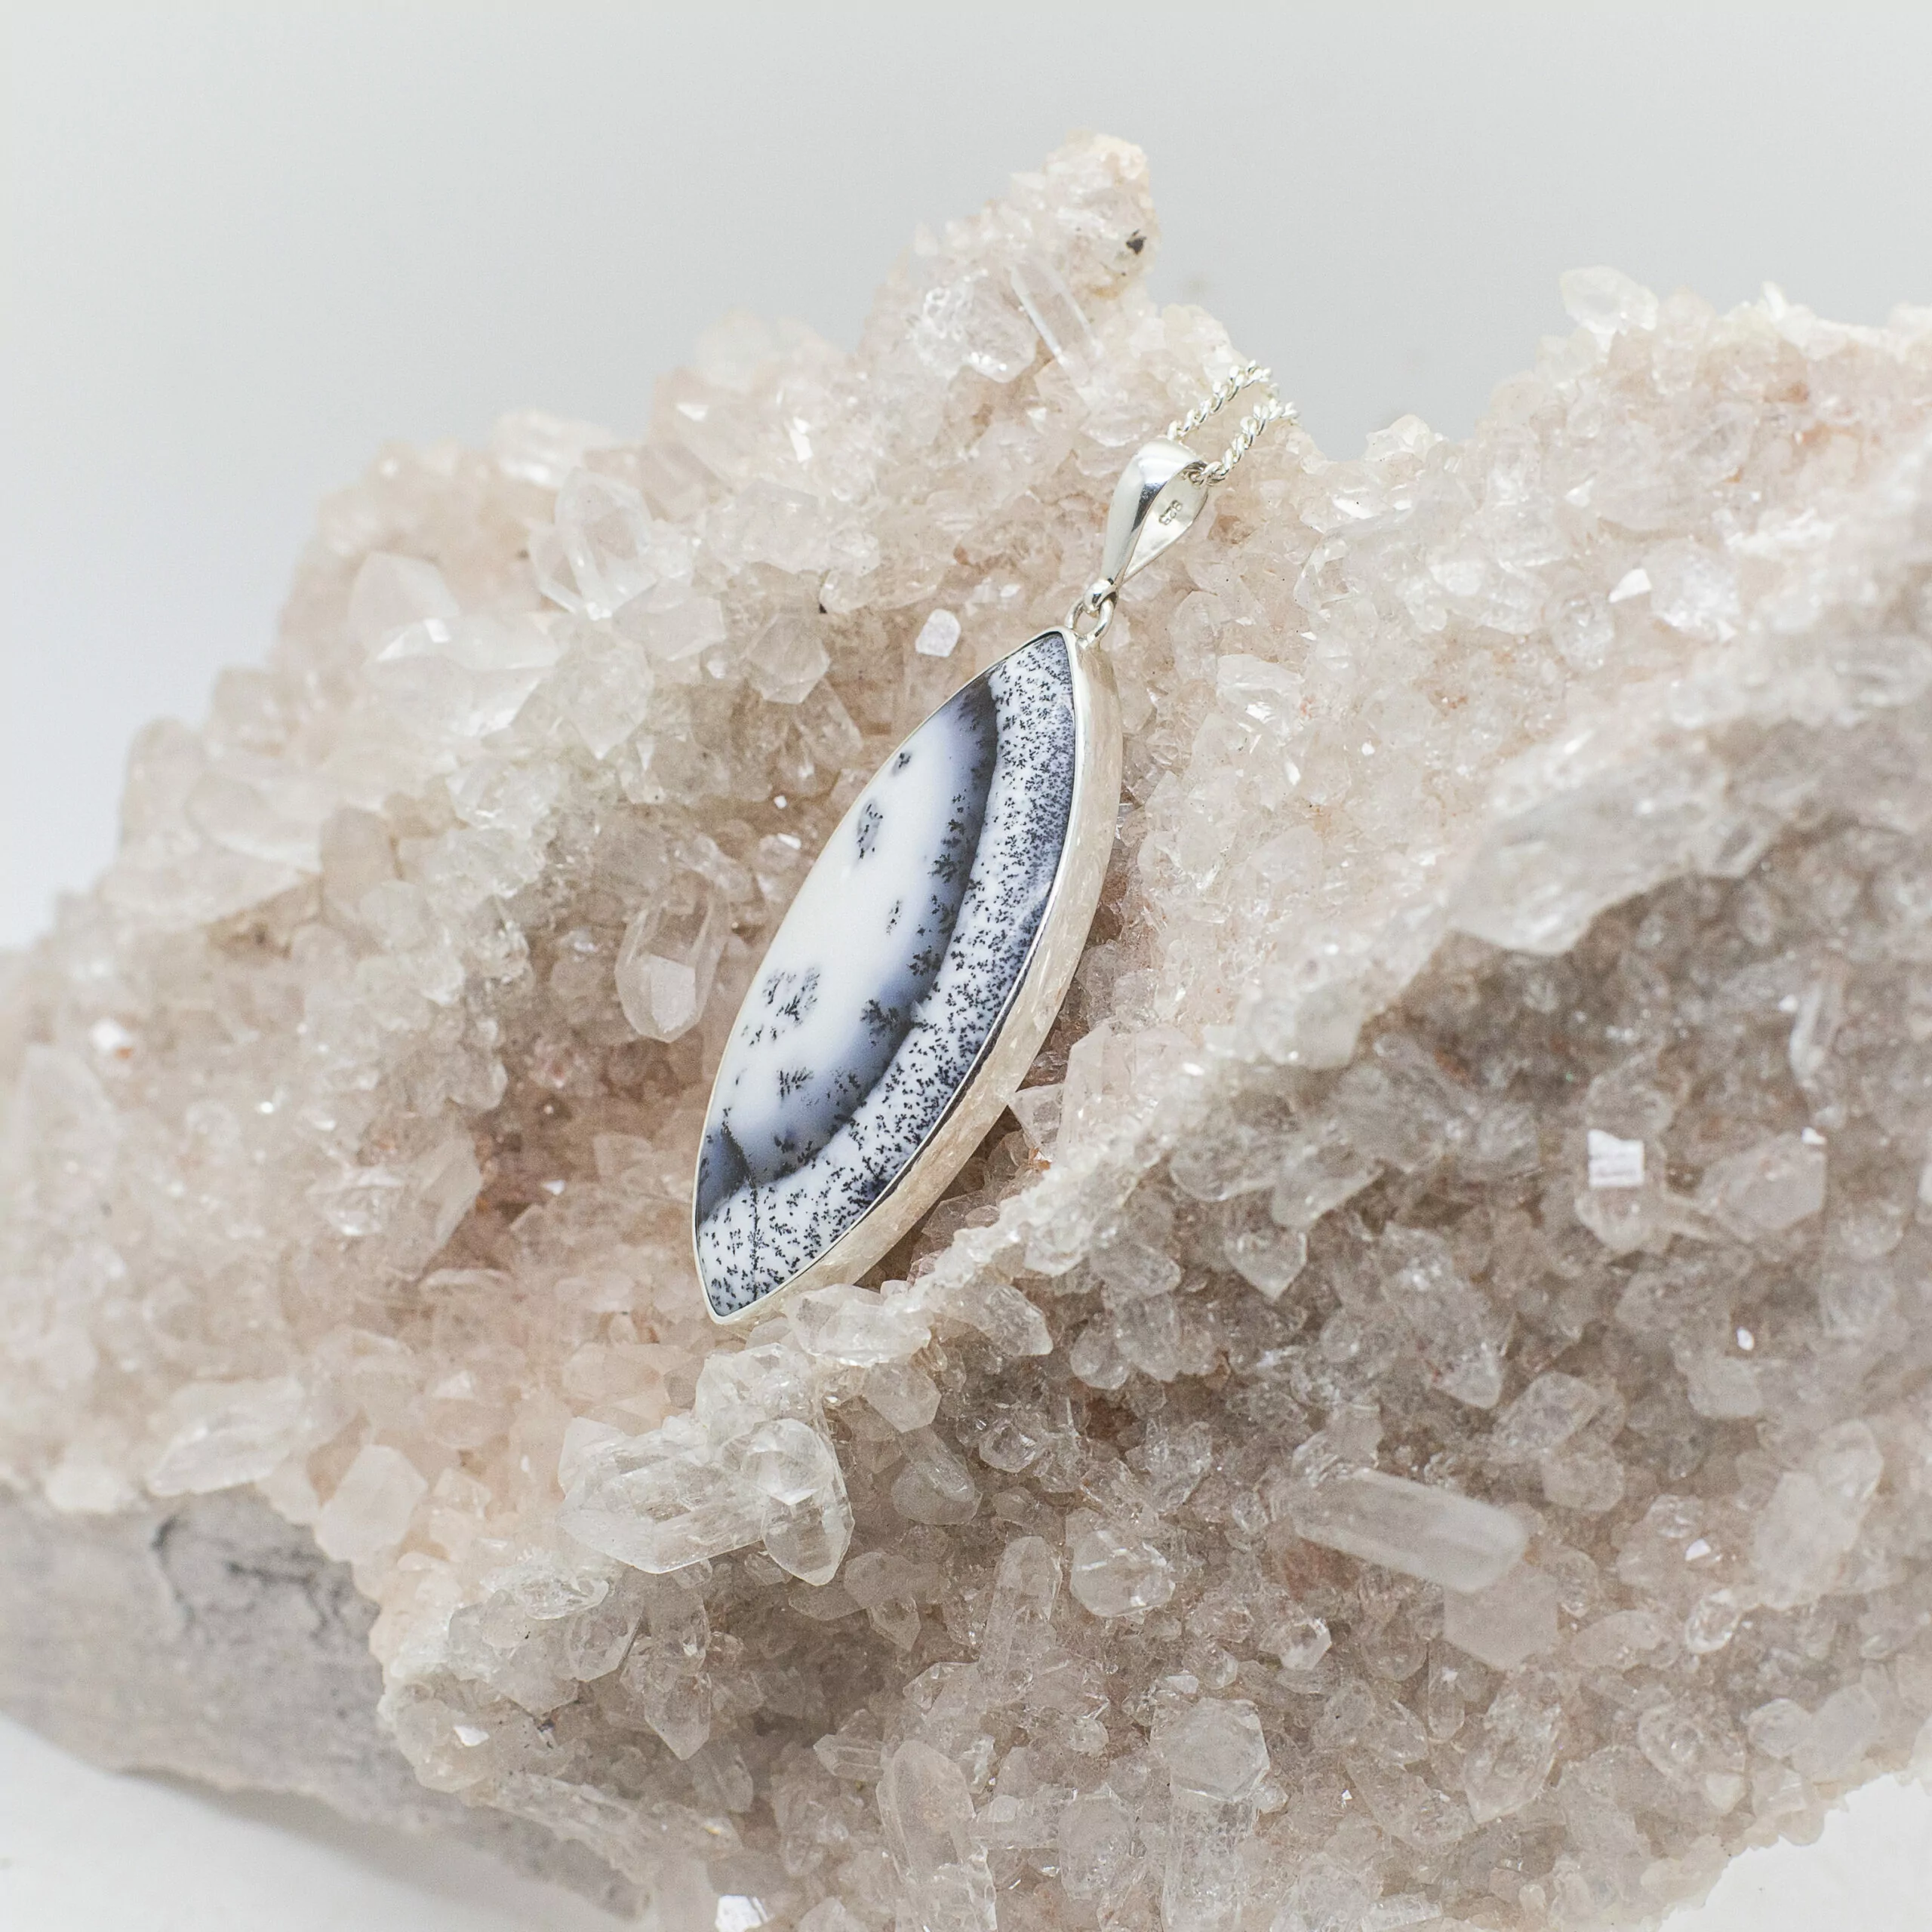 dendritic opal pendant